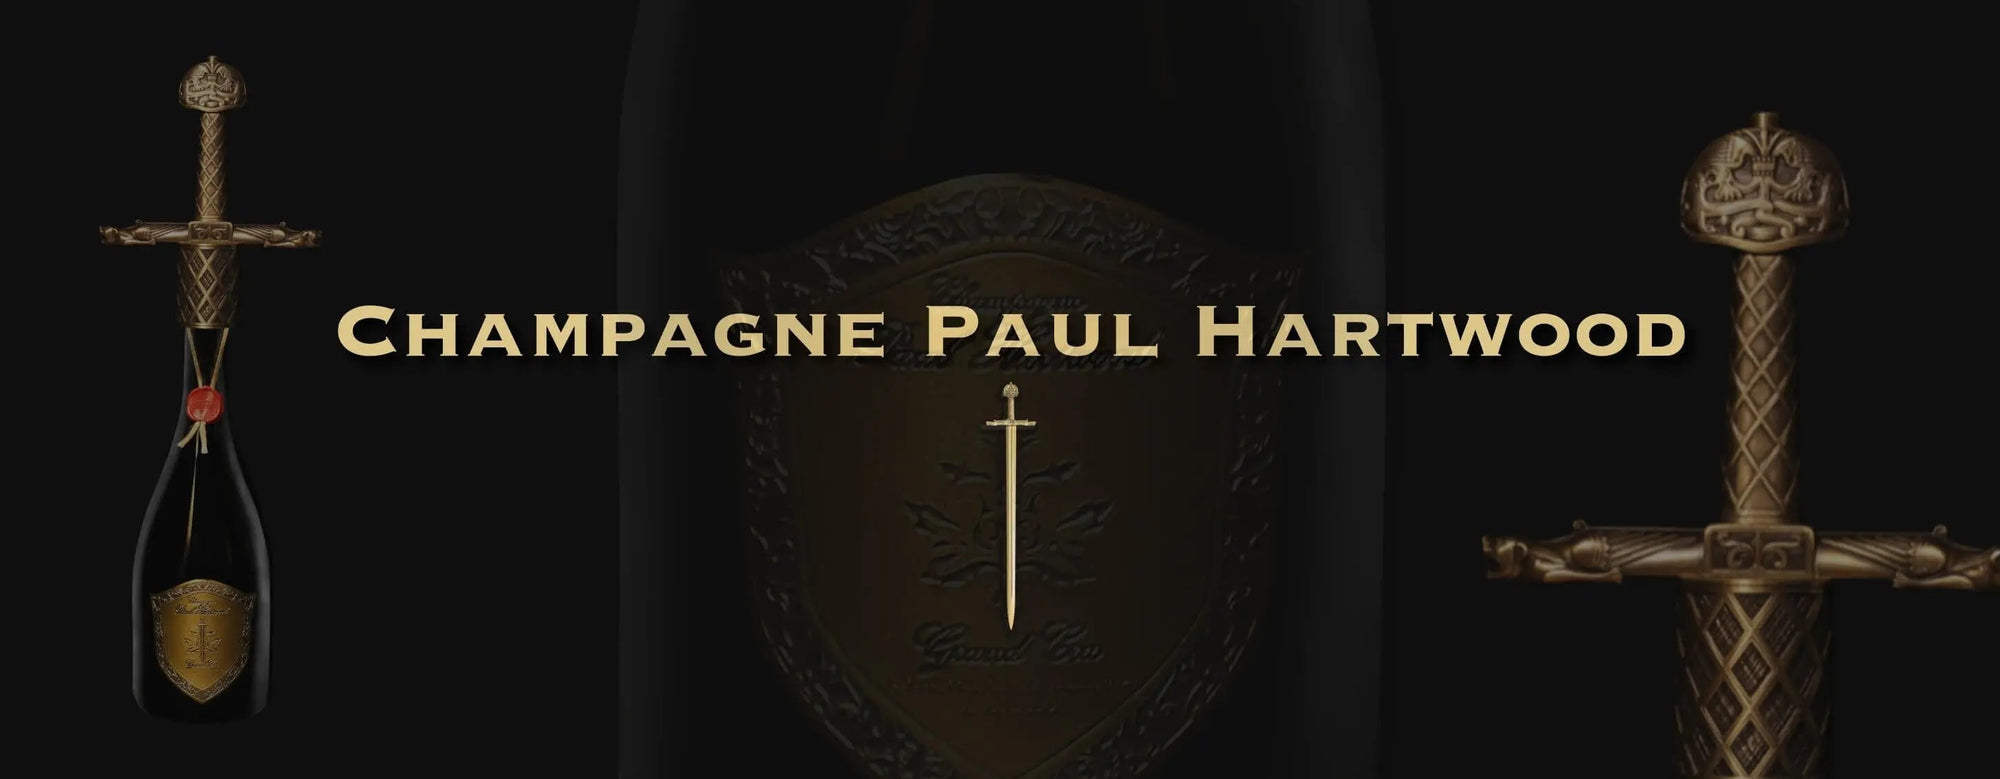 Paul Hartwood Champagne